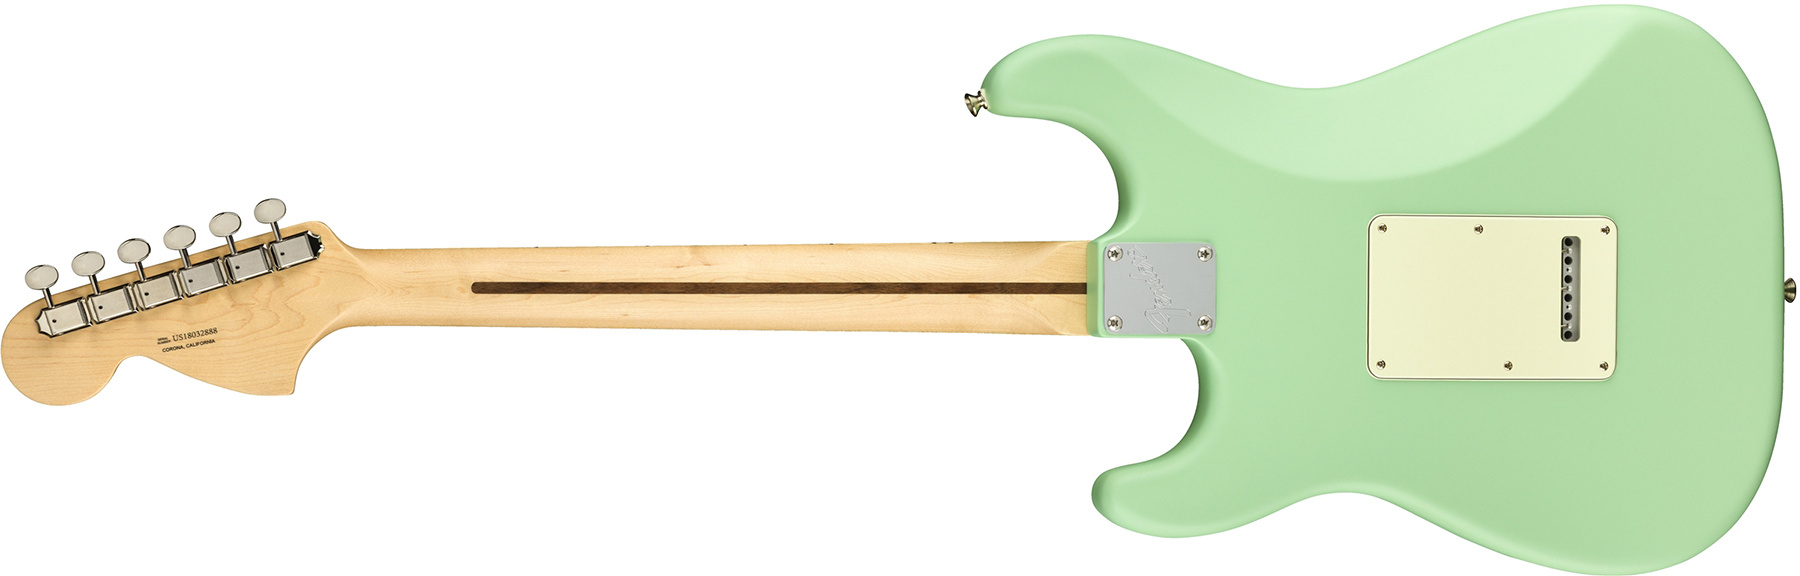 Fender Strat American Performer Usa Hss Mn - Satin Surf Green - E-Gitarre in Str-Form - Variation 1